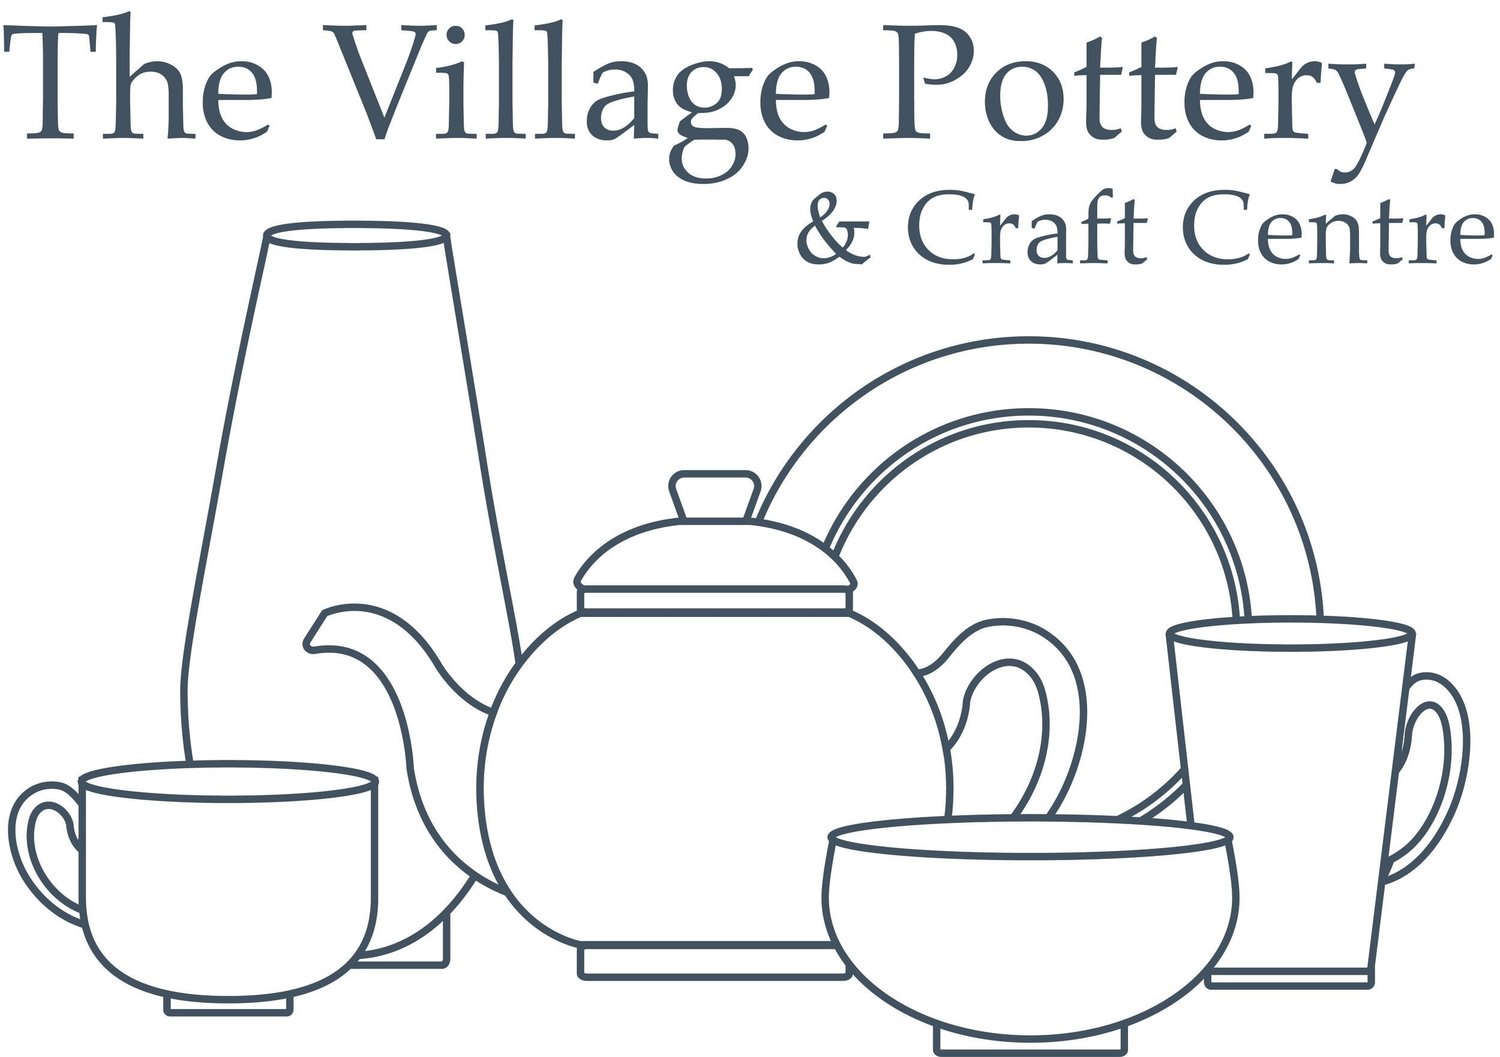 The Village Pottery & Craft Centre